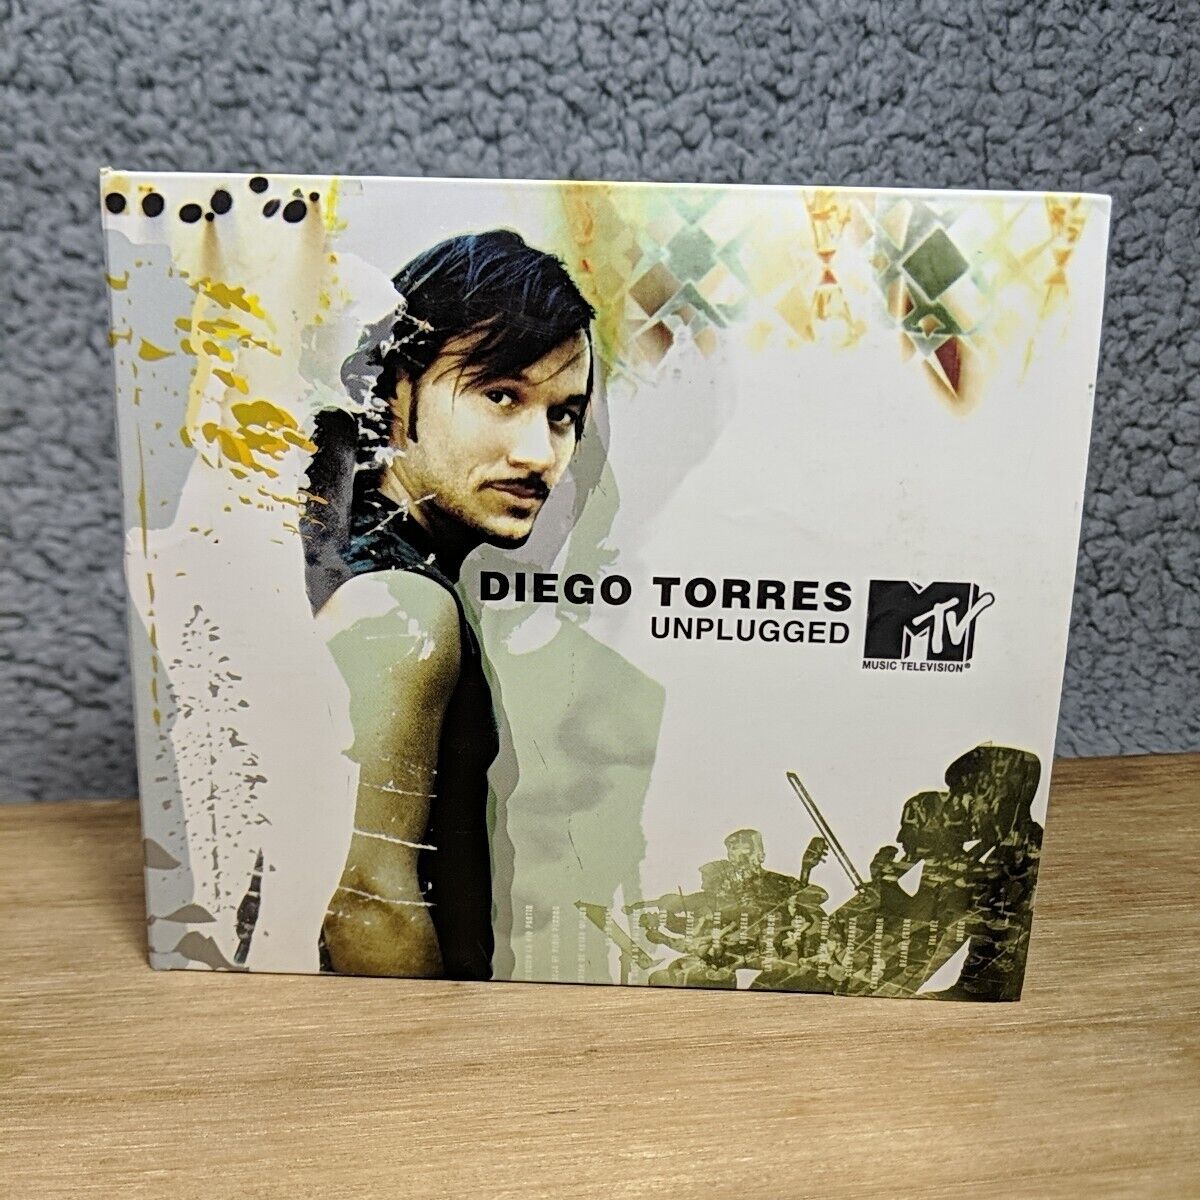 Diego Torres: MTV Unplugged [Digipak] by Diego Torres (CD, May-2004, Sony BMG)